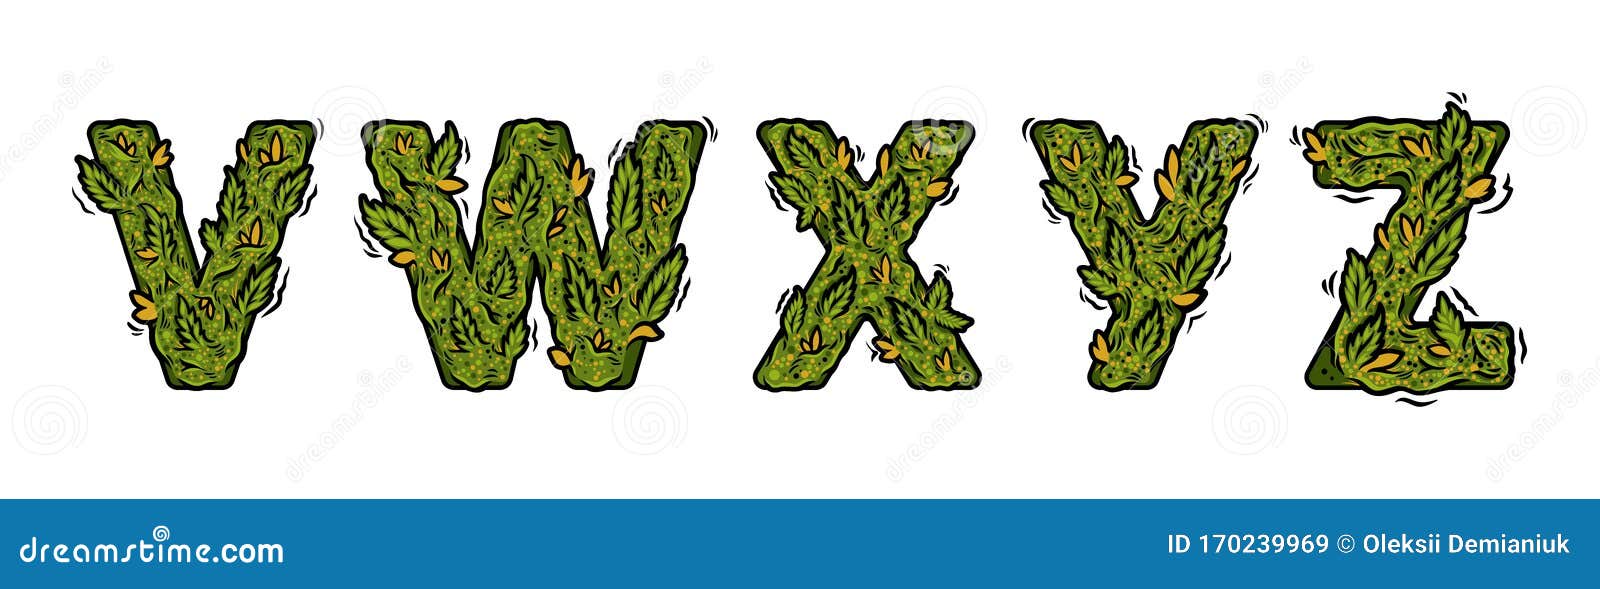 Some Part of Decorative Green Marijuana Letters Stock Vector